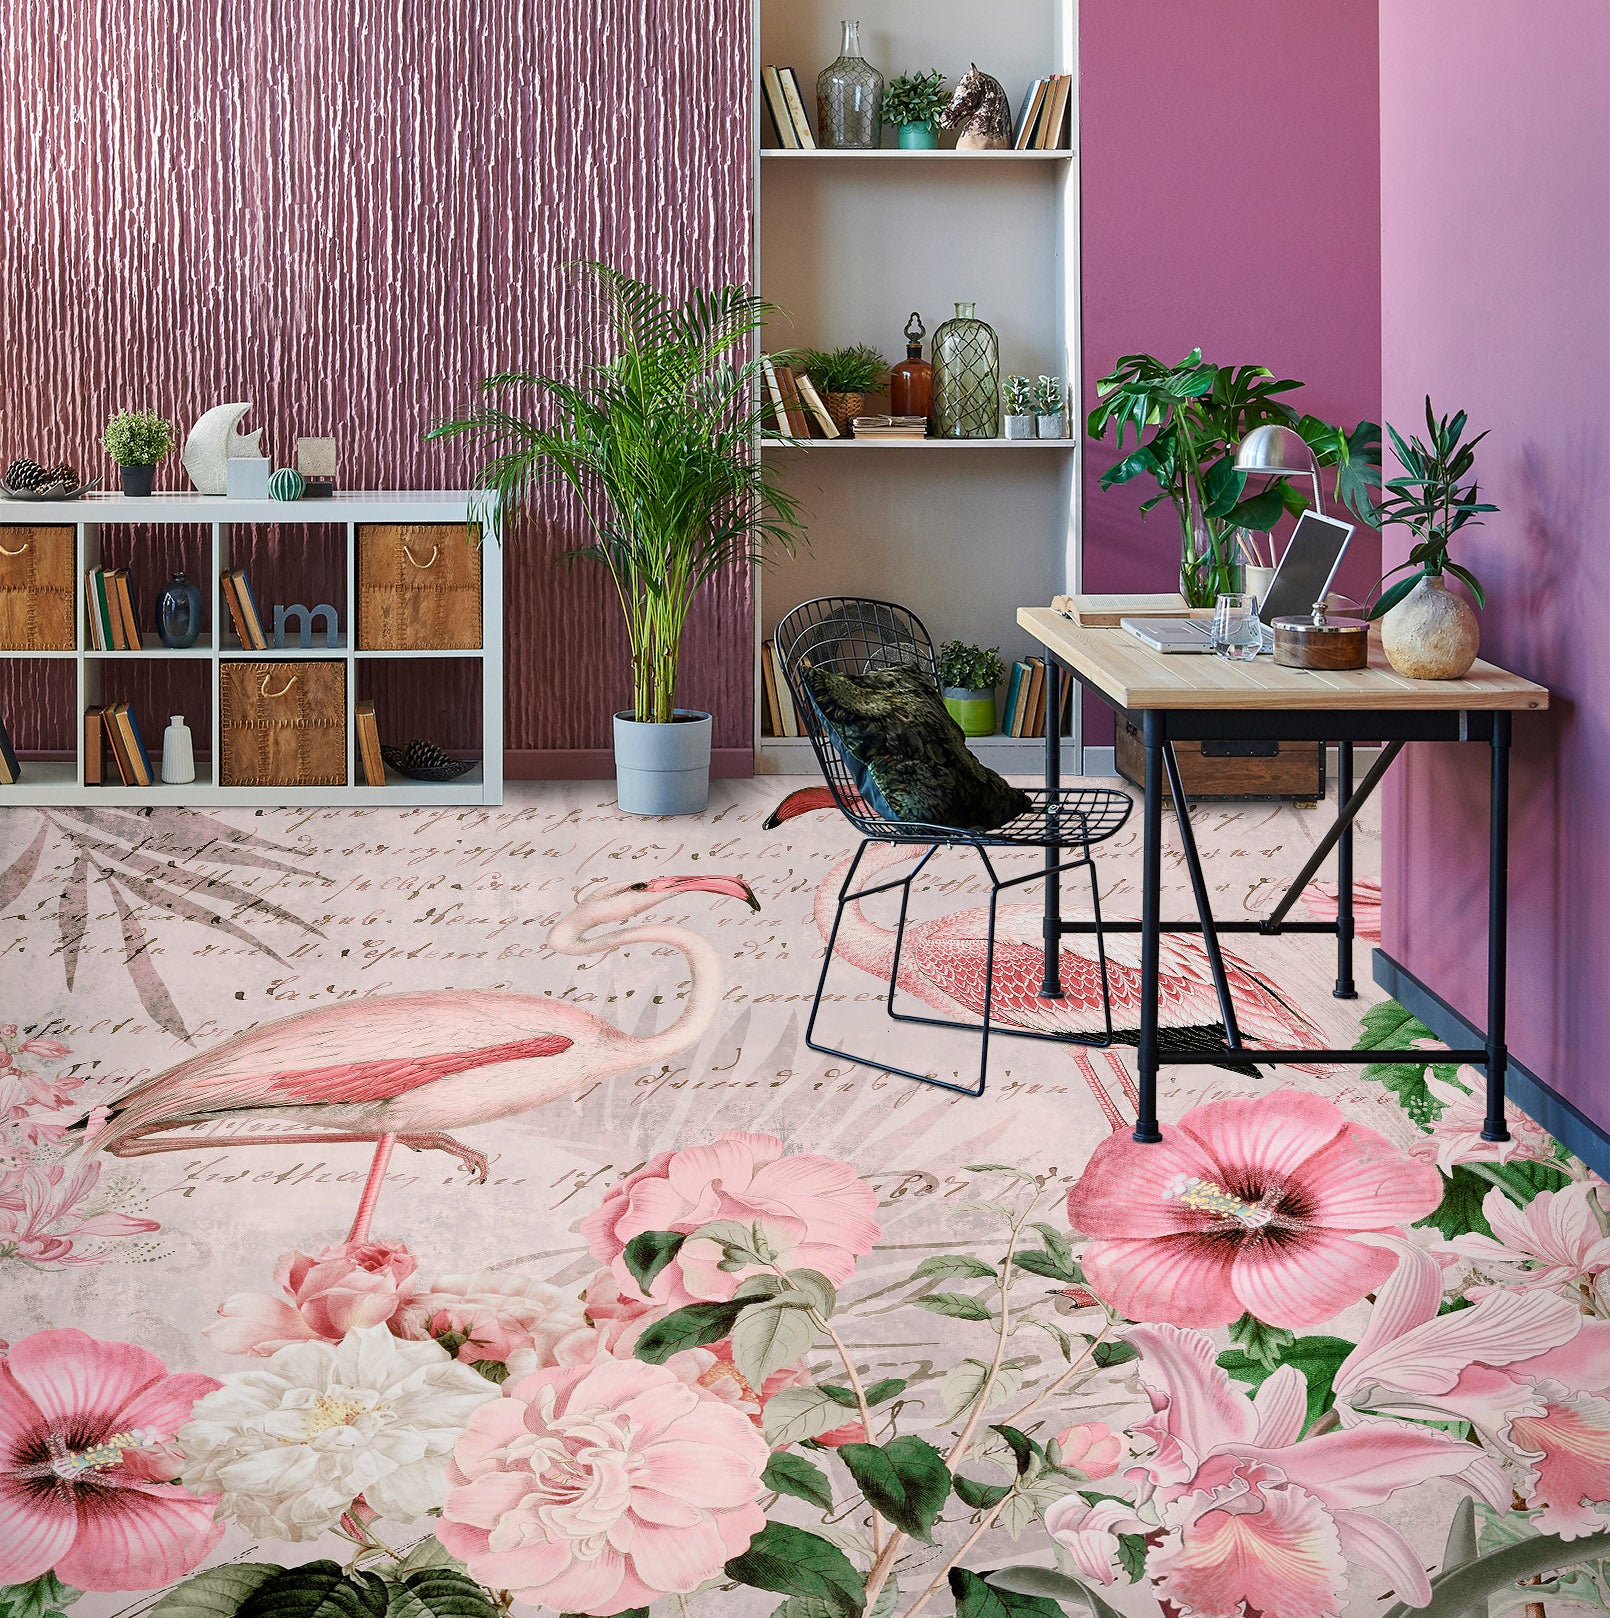 3D Pink Flower Flamingo 104143 Andrea Haase Floor Mural  Wallpaper Murals Self-Adhesive Removable Print Epoxy